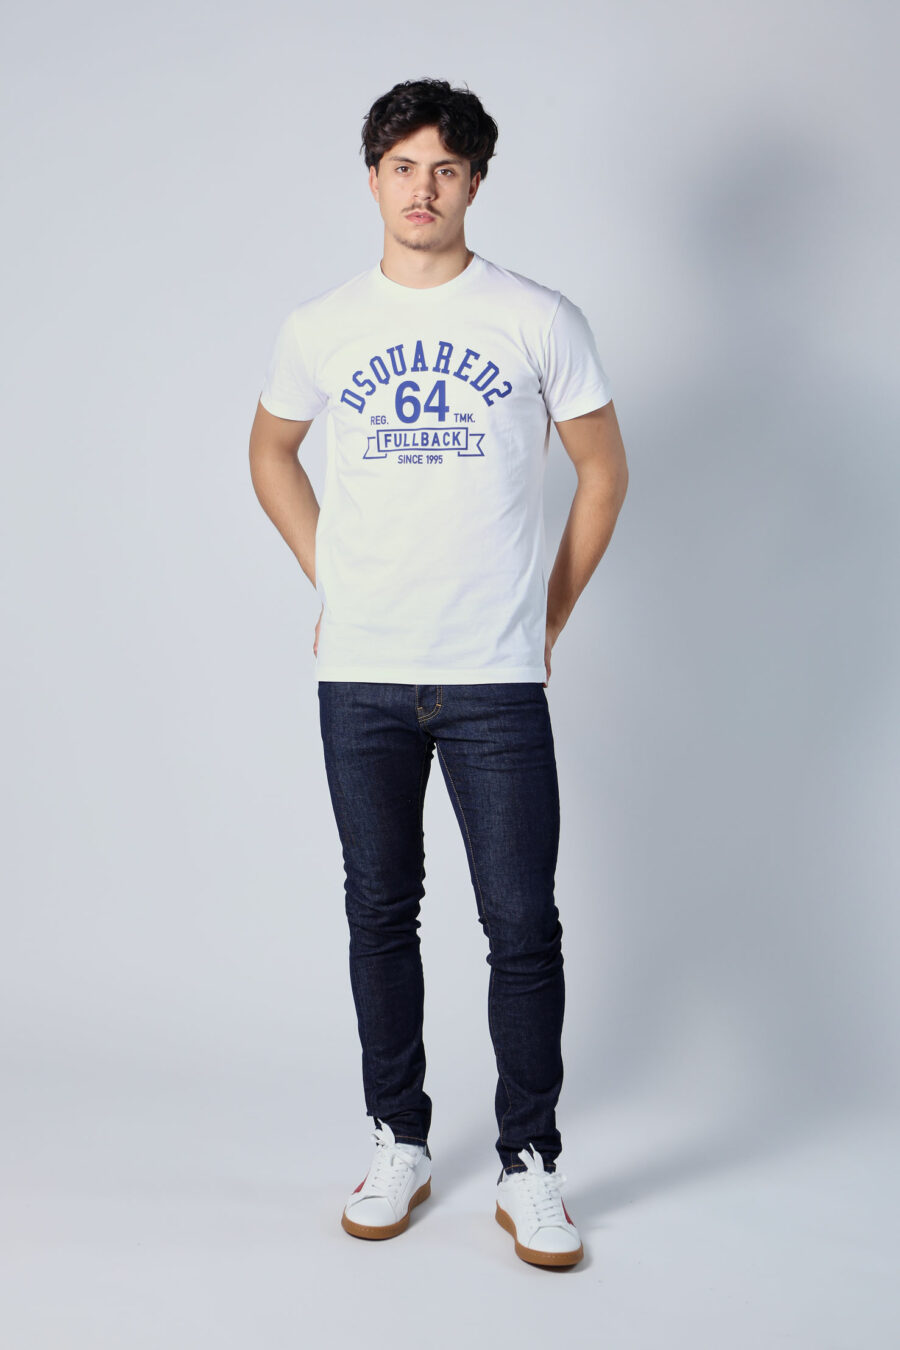 Camiseta blanca con maxilogo "college" azul - Untitled Catalog 05651